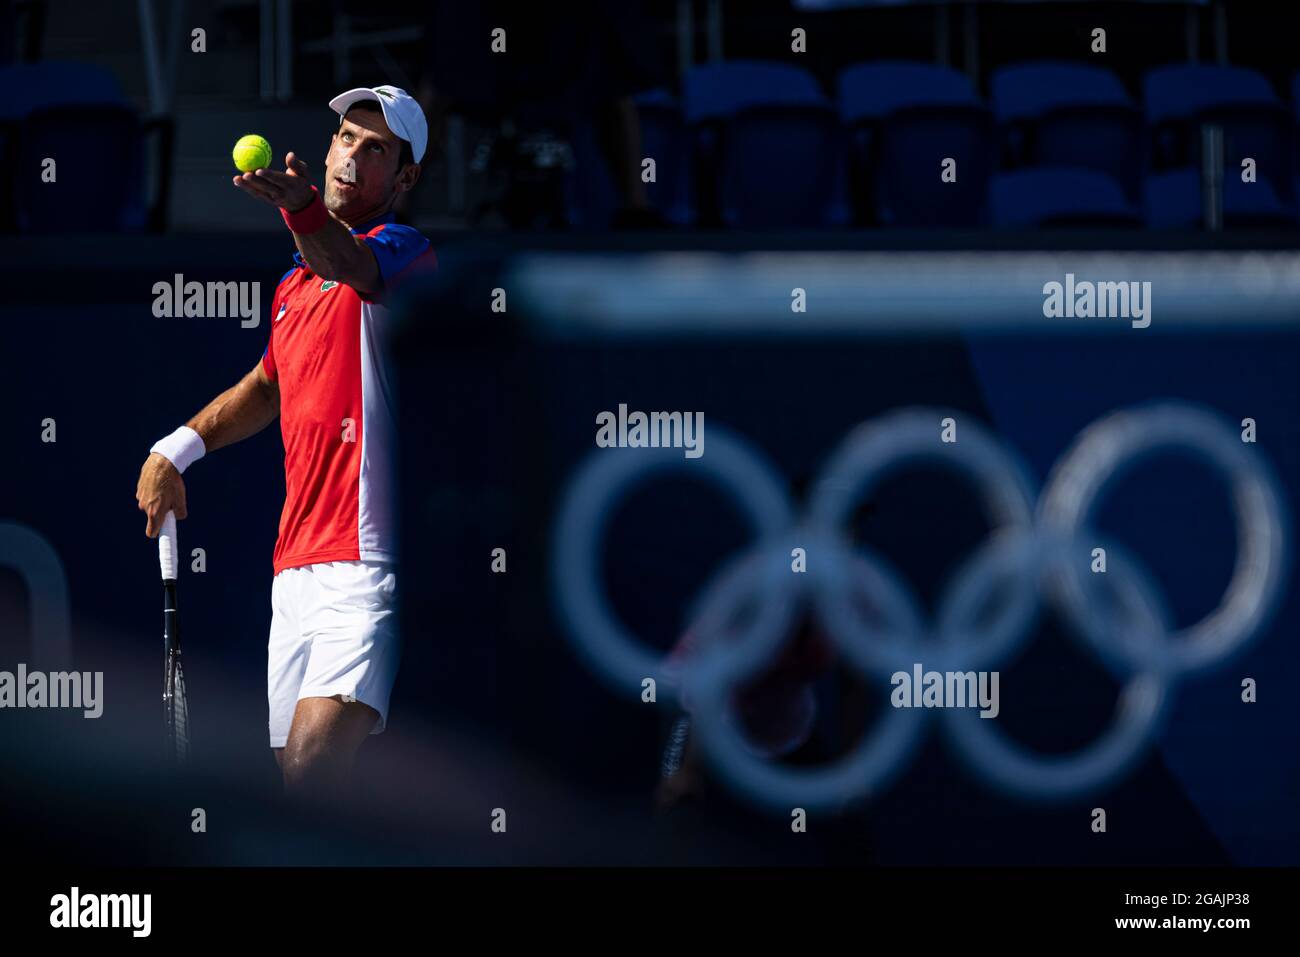 Tokyo, Giappone. 31 luglio 2021. Olimpiadi: Partita di tennis tra Novak Djokovic e Pablo Carreño all'Ariake Arena in Giappone. © ABEL F. ROS / Alamy Live News Foto Stock